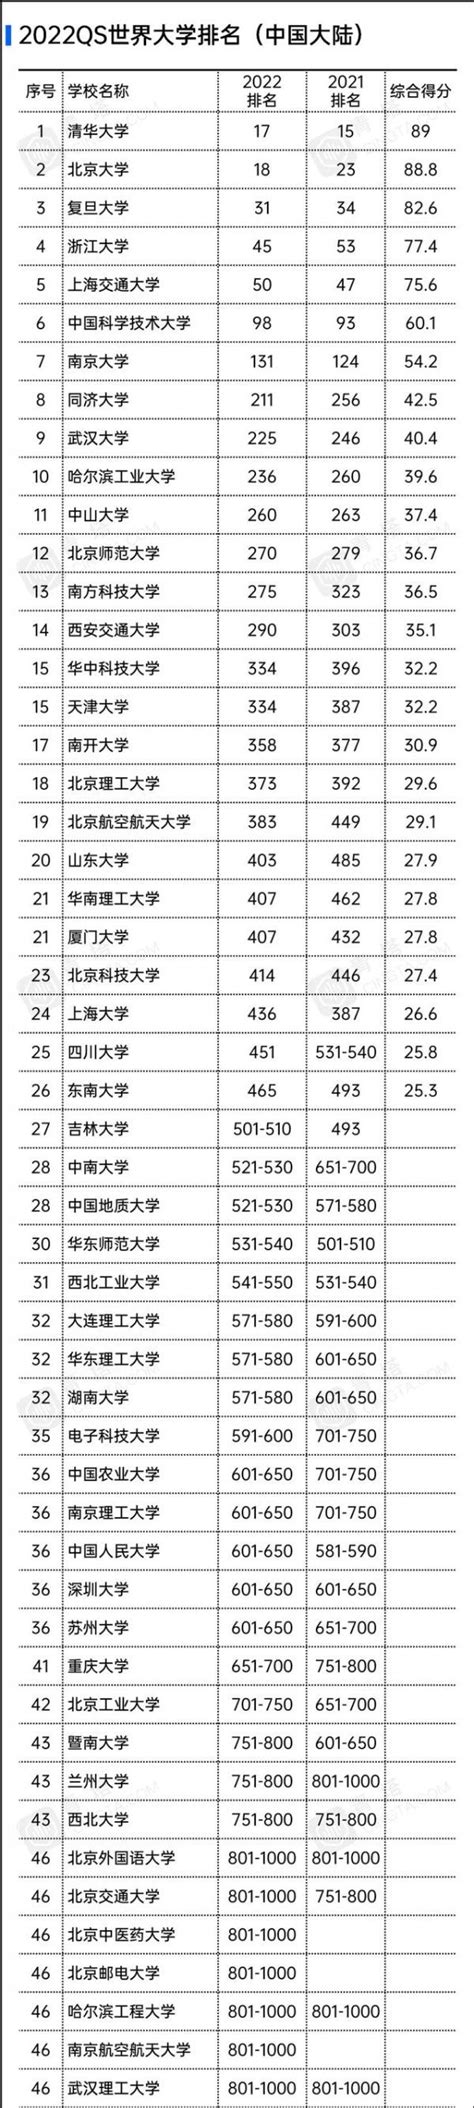 QS2022世界大学排名,北京大学进入前20,人大名次下降|清华大学|北京大学|排名_新浪新闻